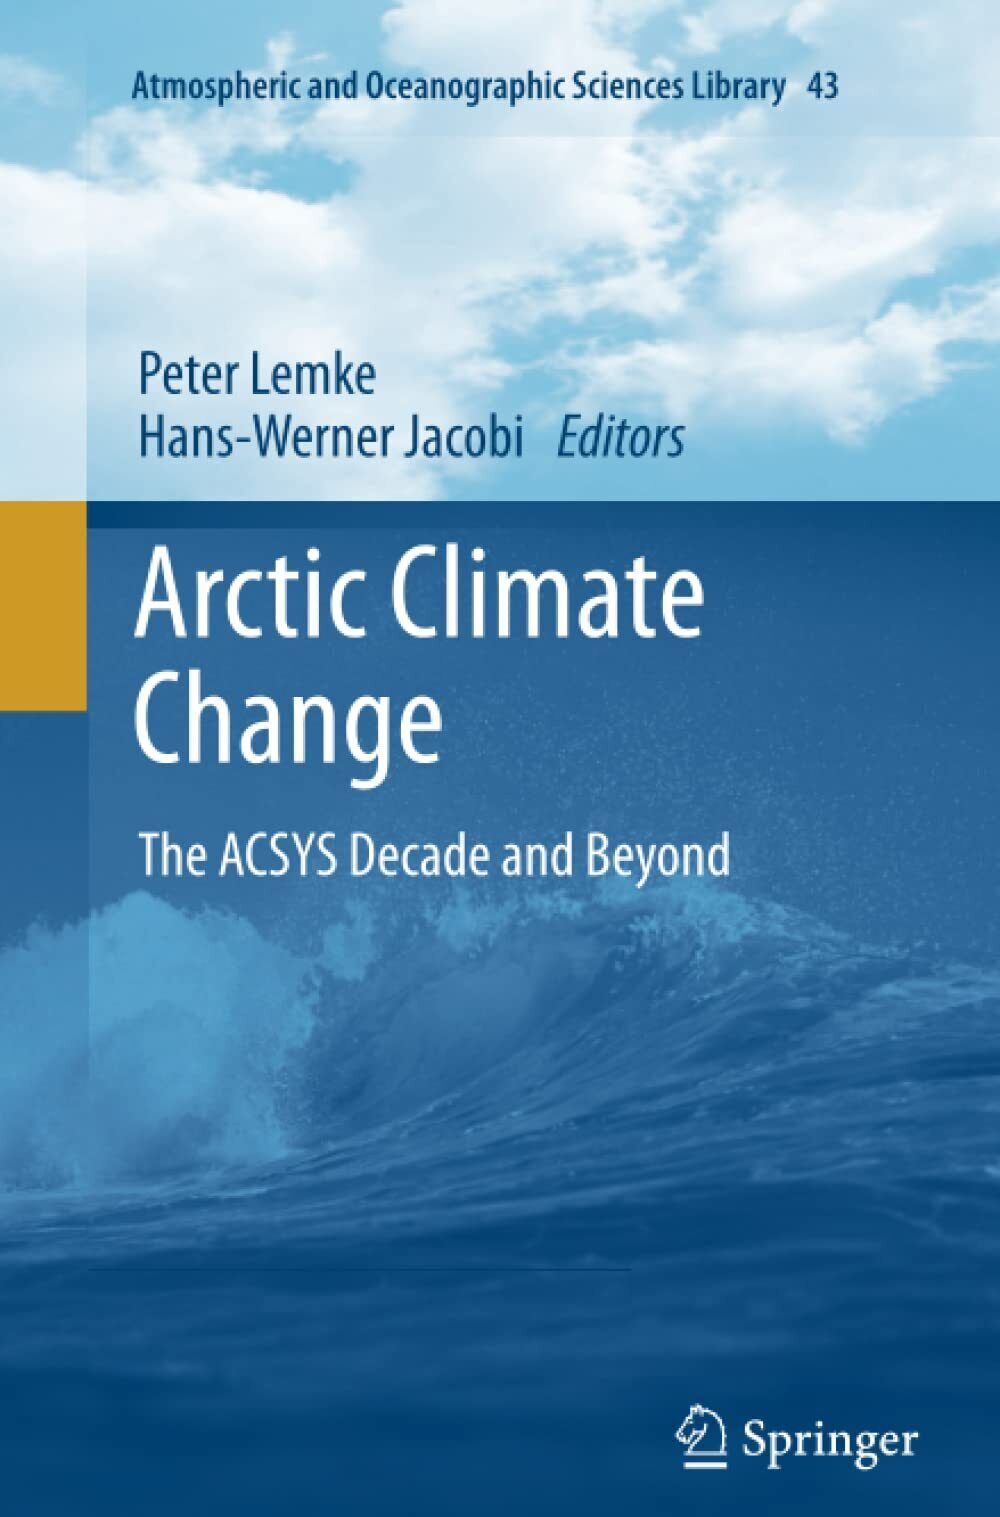 Arctic Climate Change - Peter Lemke - Springer, 2014